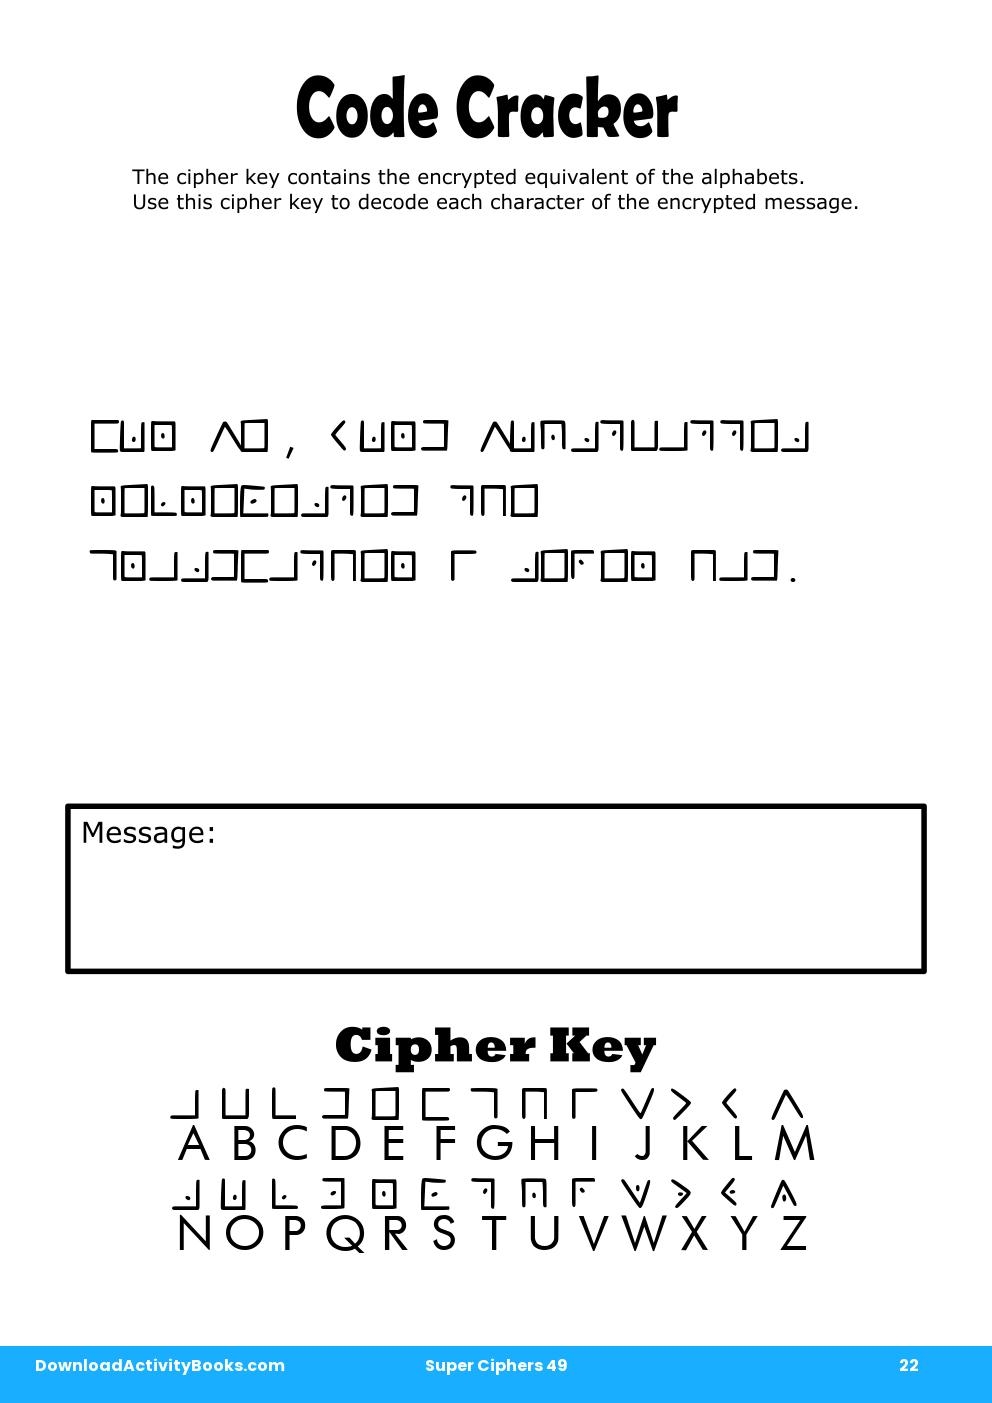 Code Cracker in Super Ciphers 49